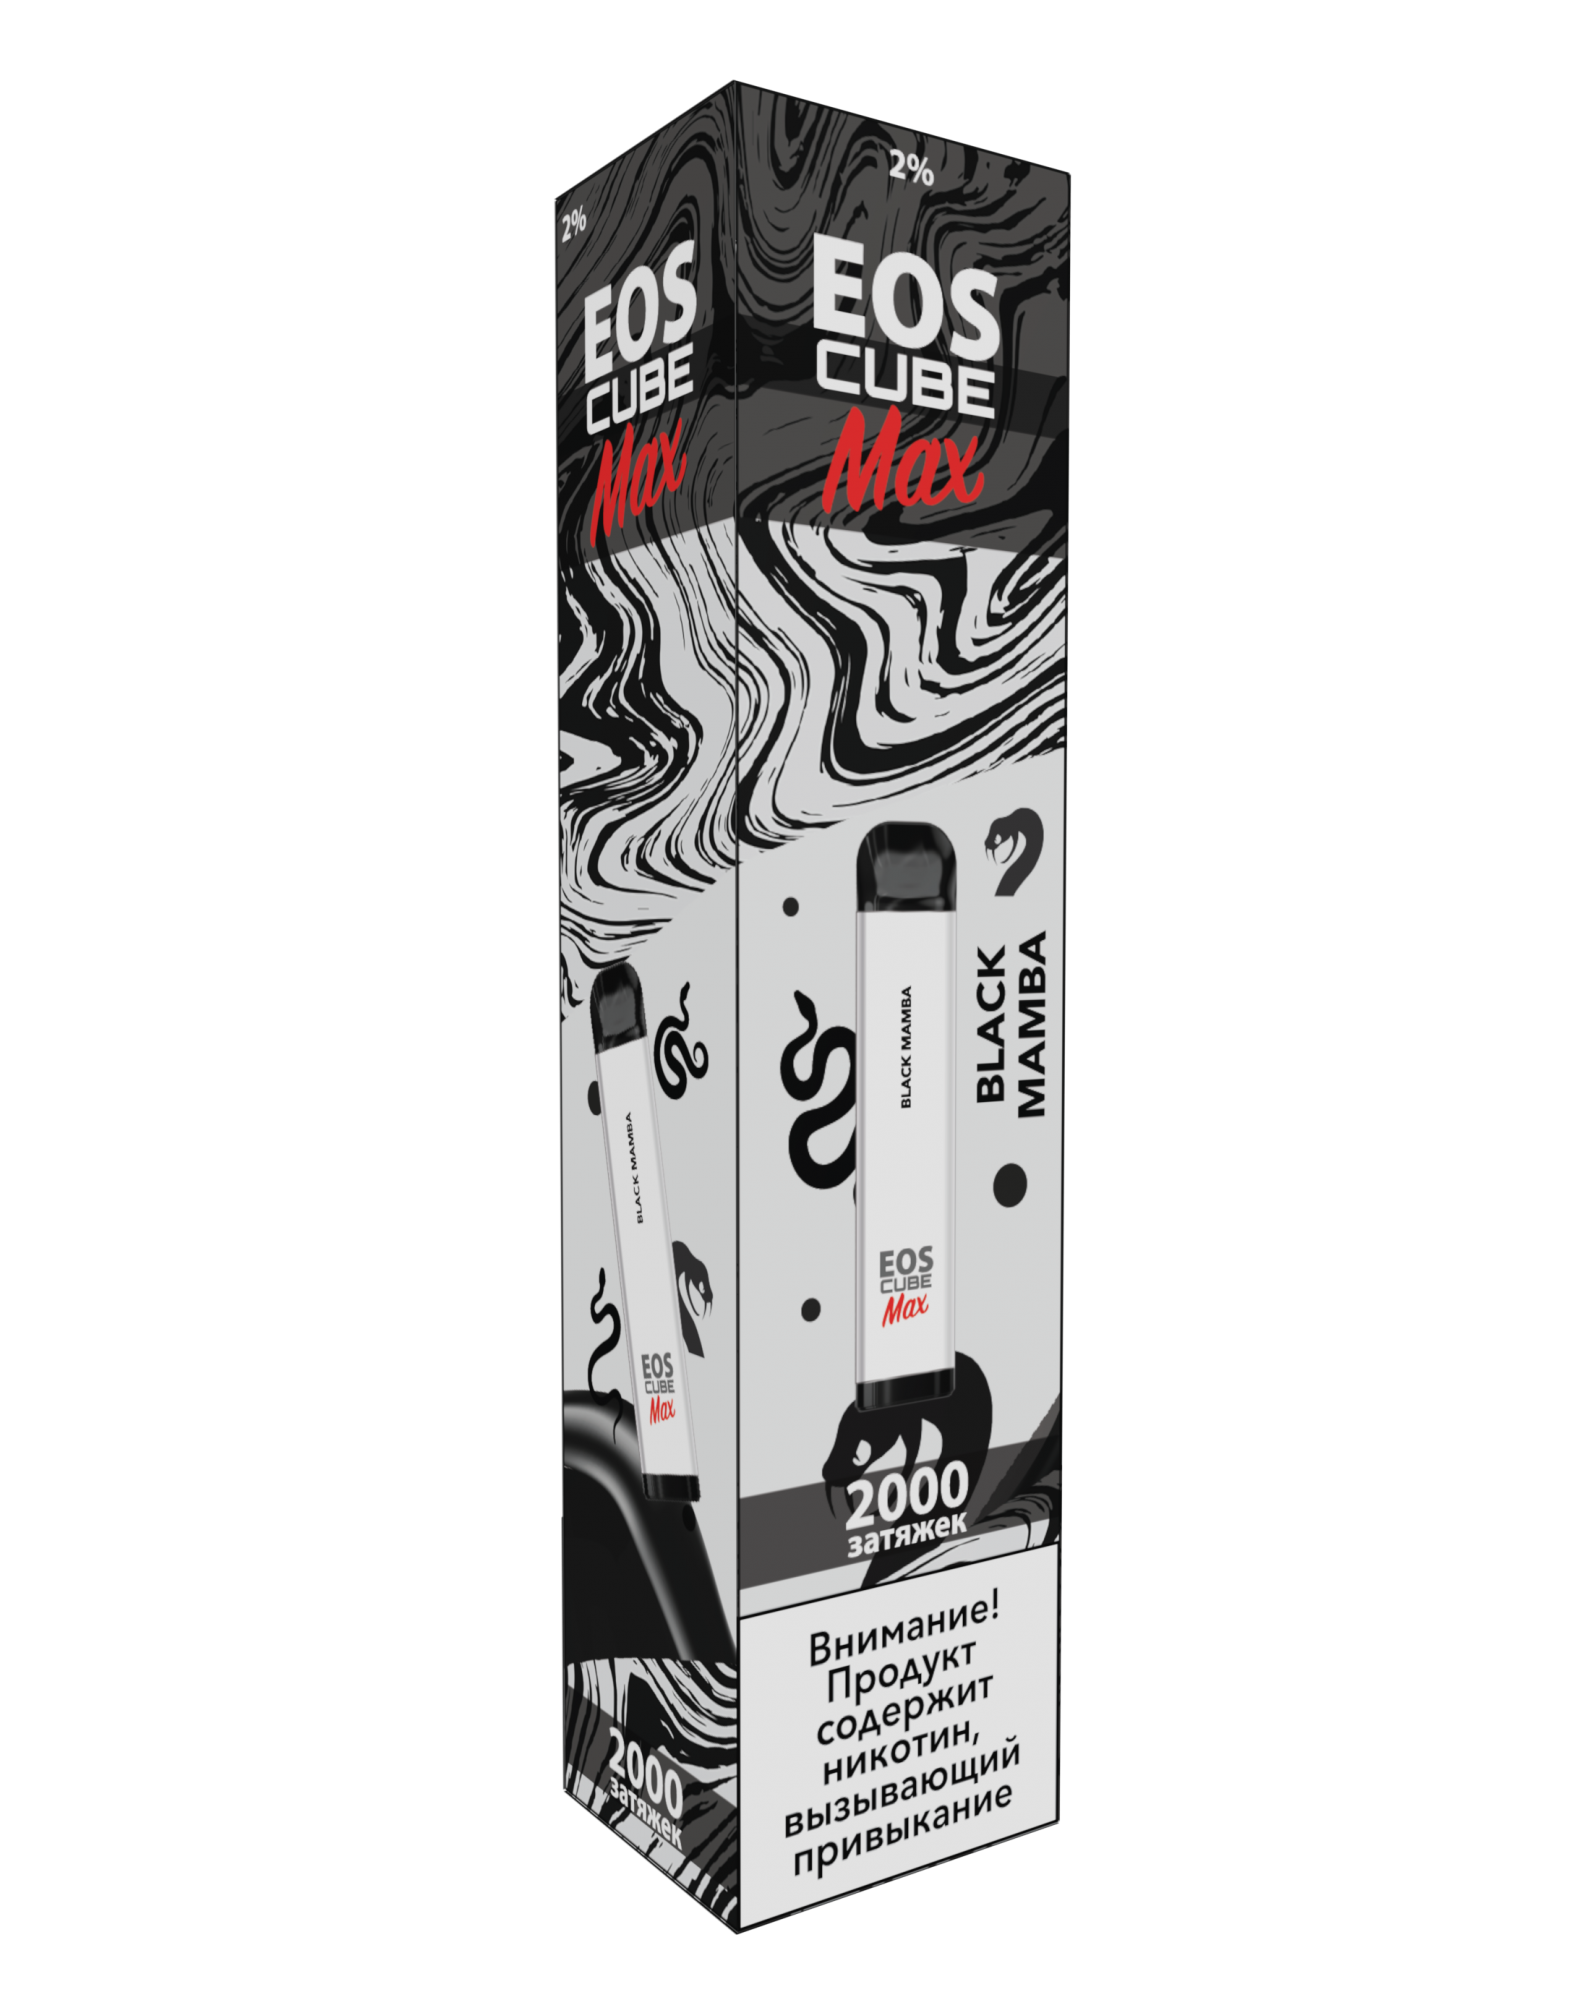 EOS электронная сигарета. EOS Cube. Одноразовые электронные сигареты. Black Mamba электронная сигарета. Cube max